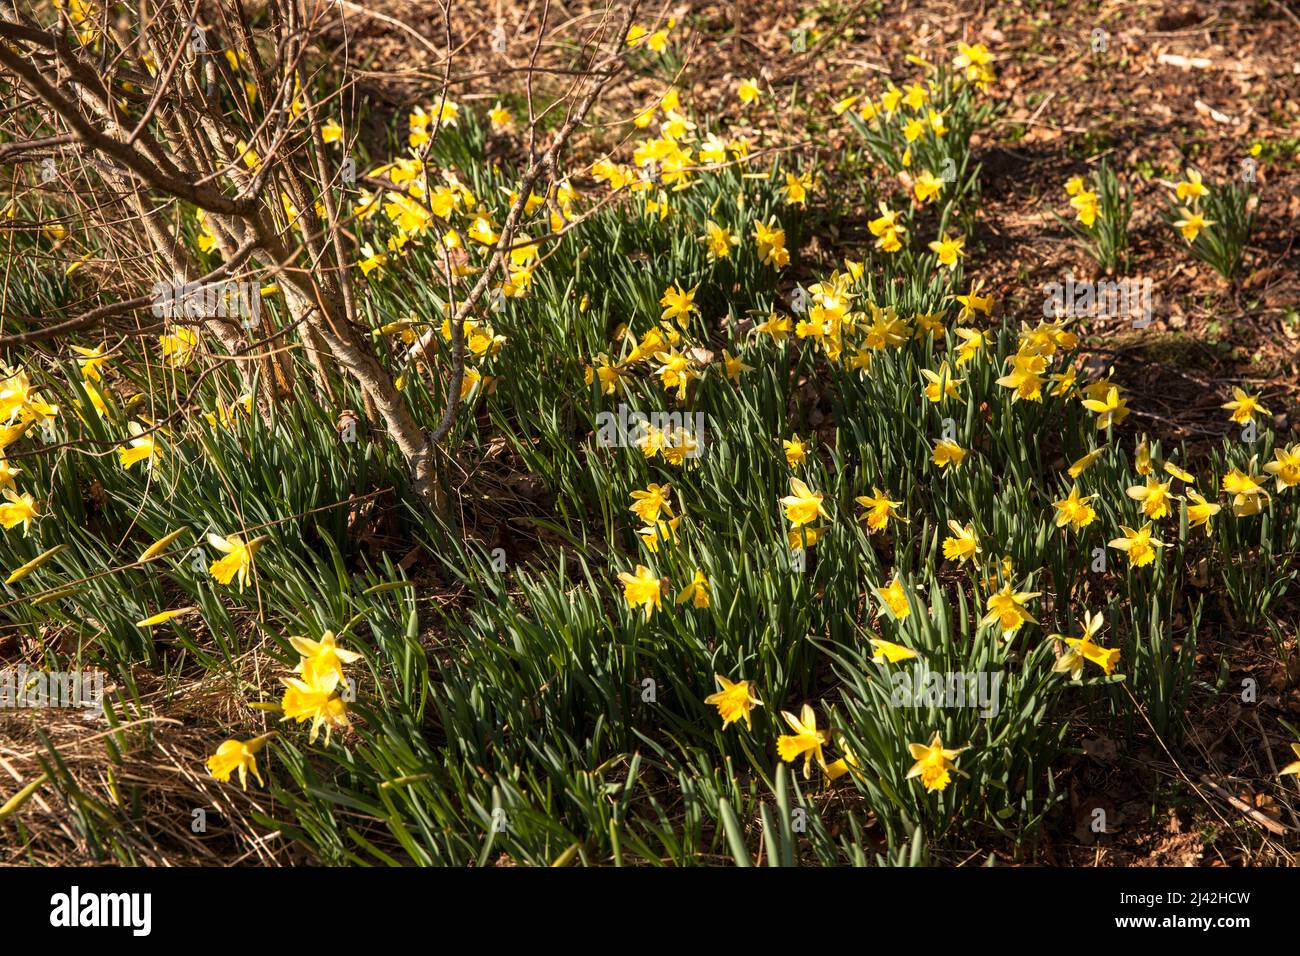 wild Narcissus grow in the nature reserve Perlenbach-Fuhrtsbachtal valley near Monschau in the Eifel region, North Rhine-Westphalia, Germany. wilde Na Stock Photo